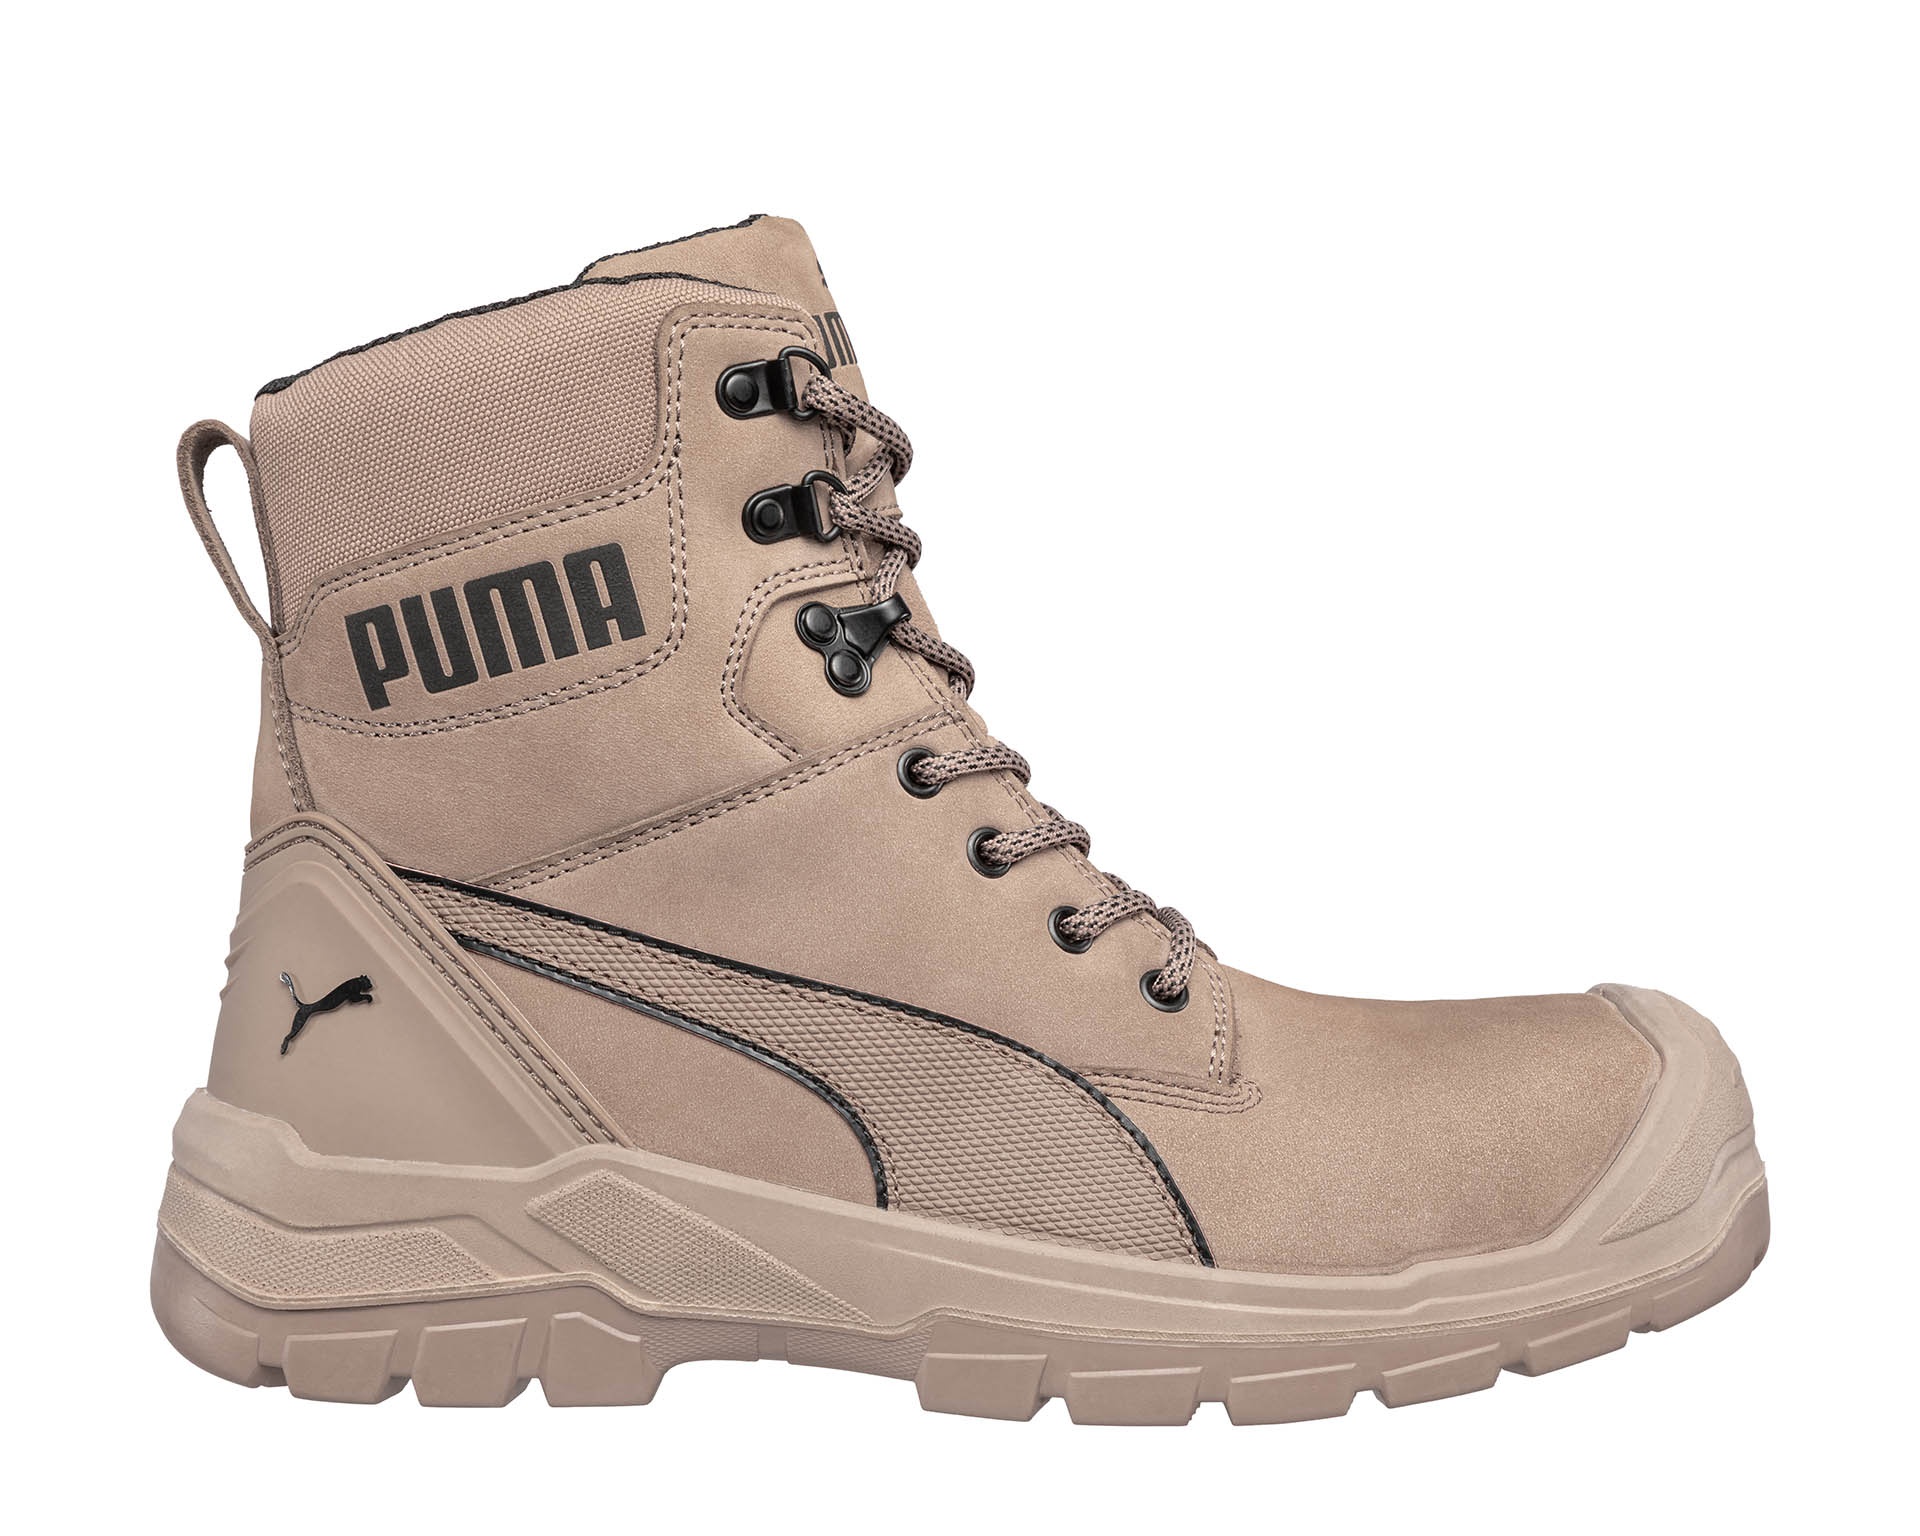 puma work boots near me